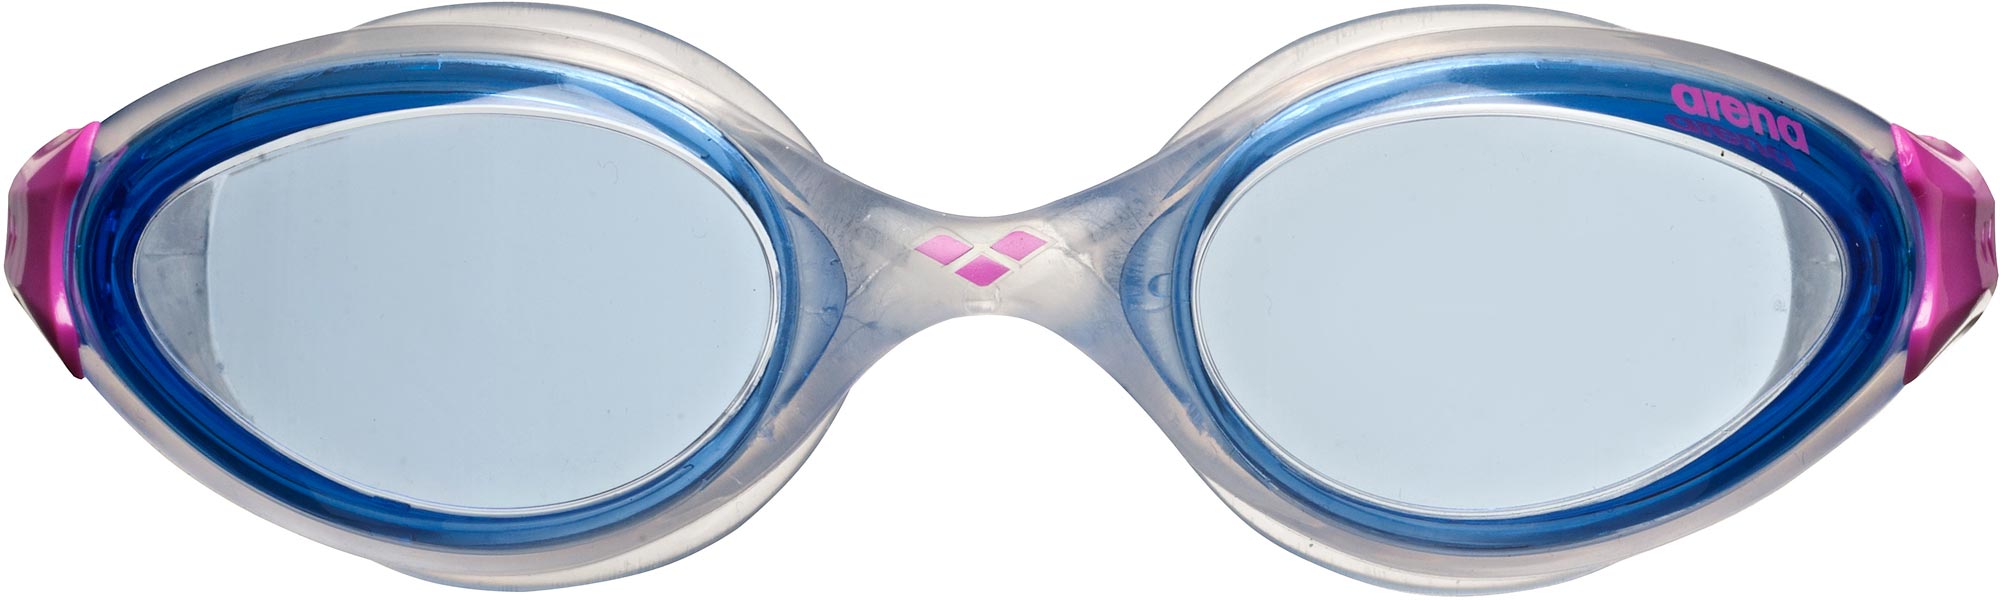 Women’s  swimming goggles